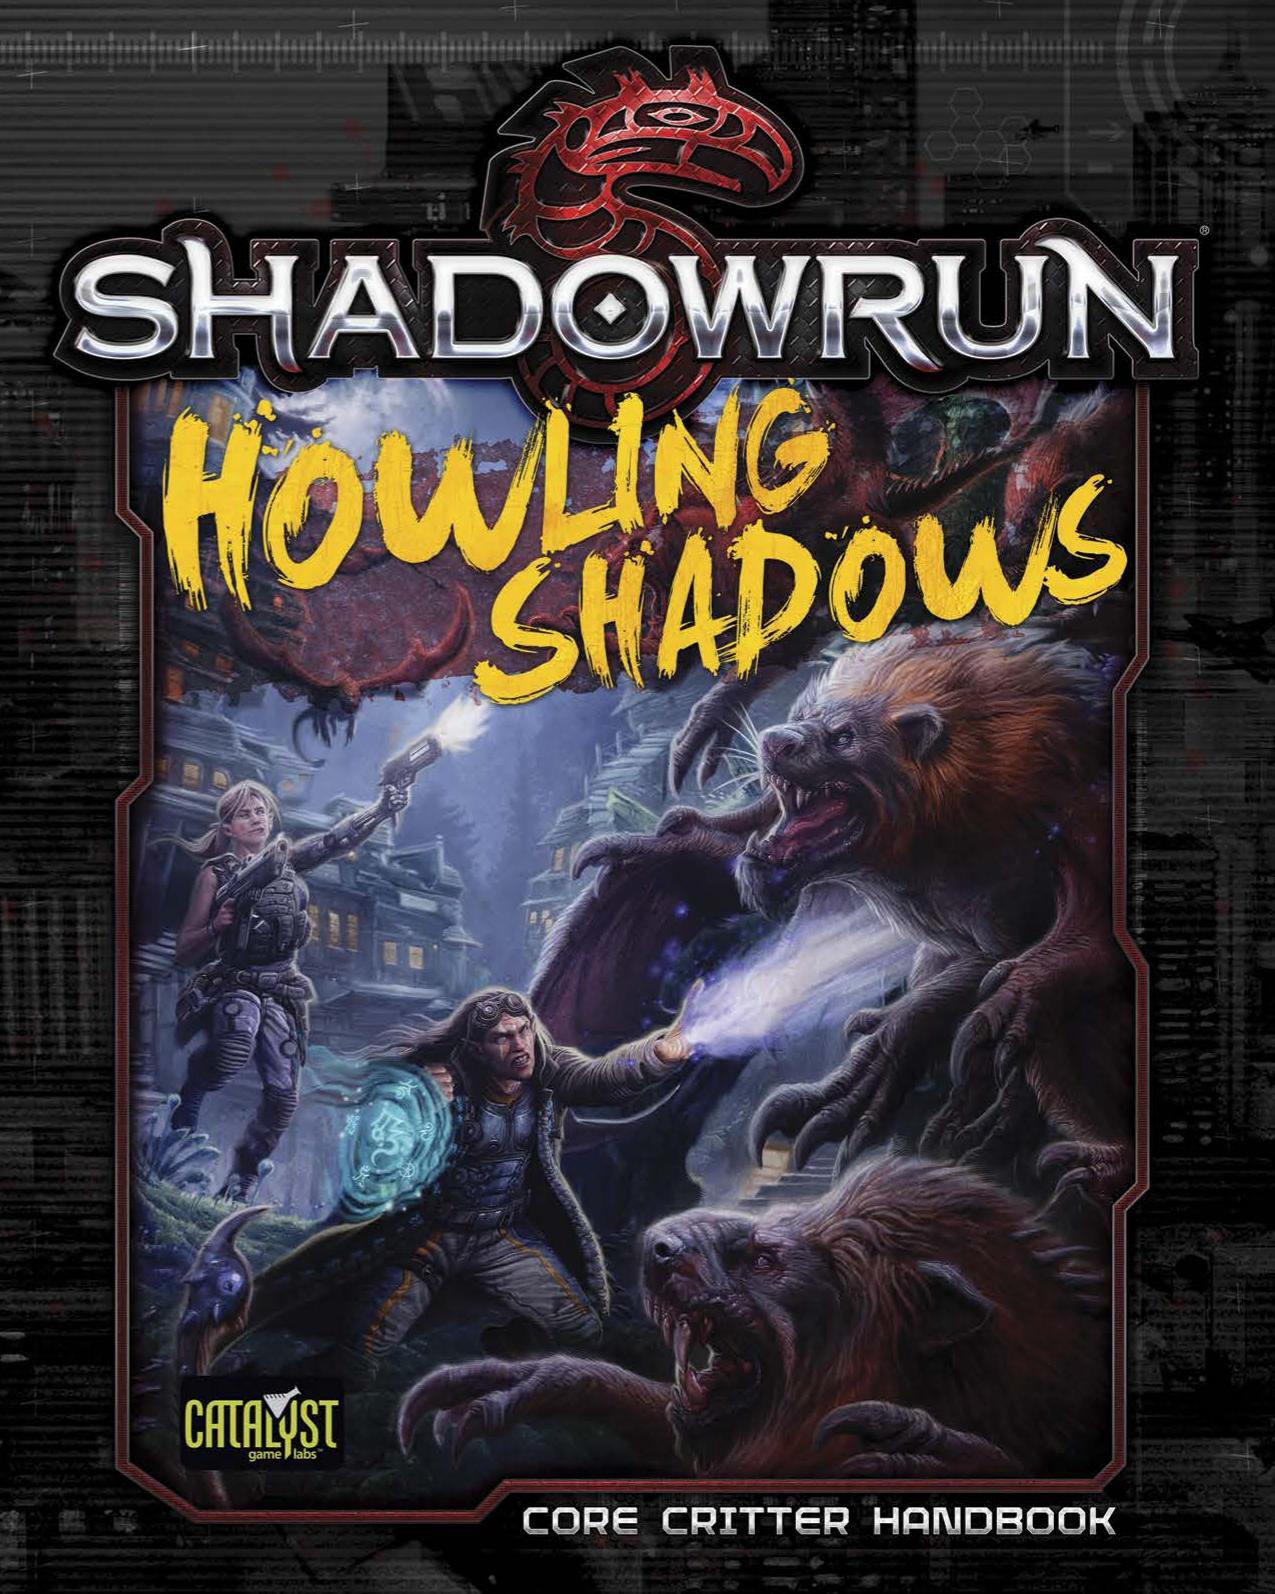 Shadowrun: Howling Shadows